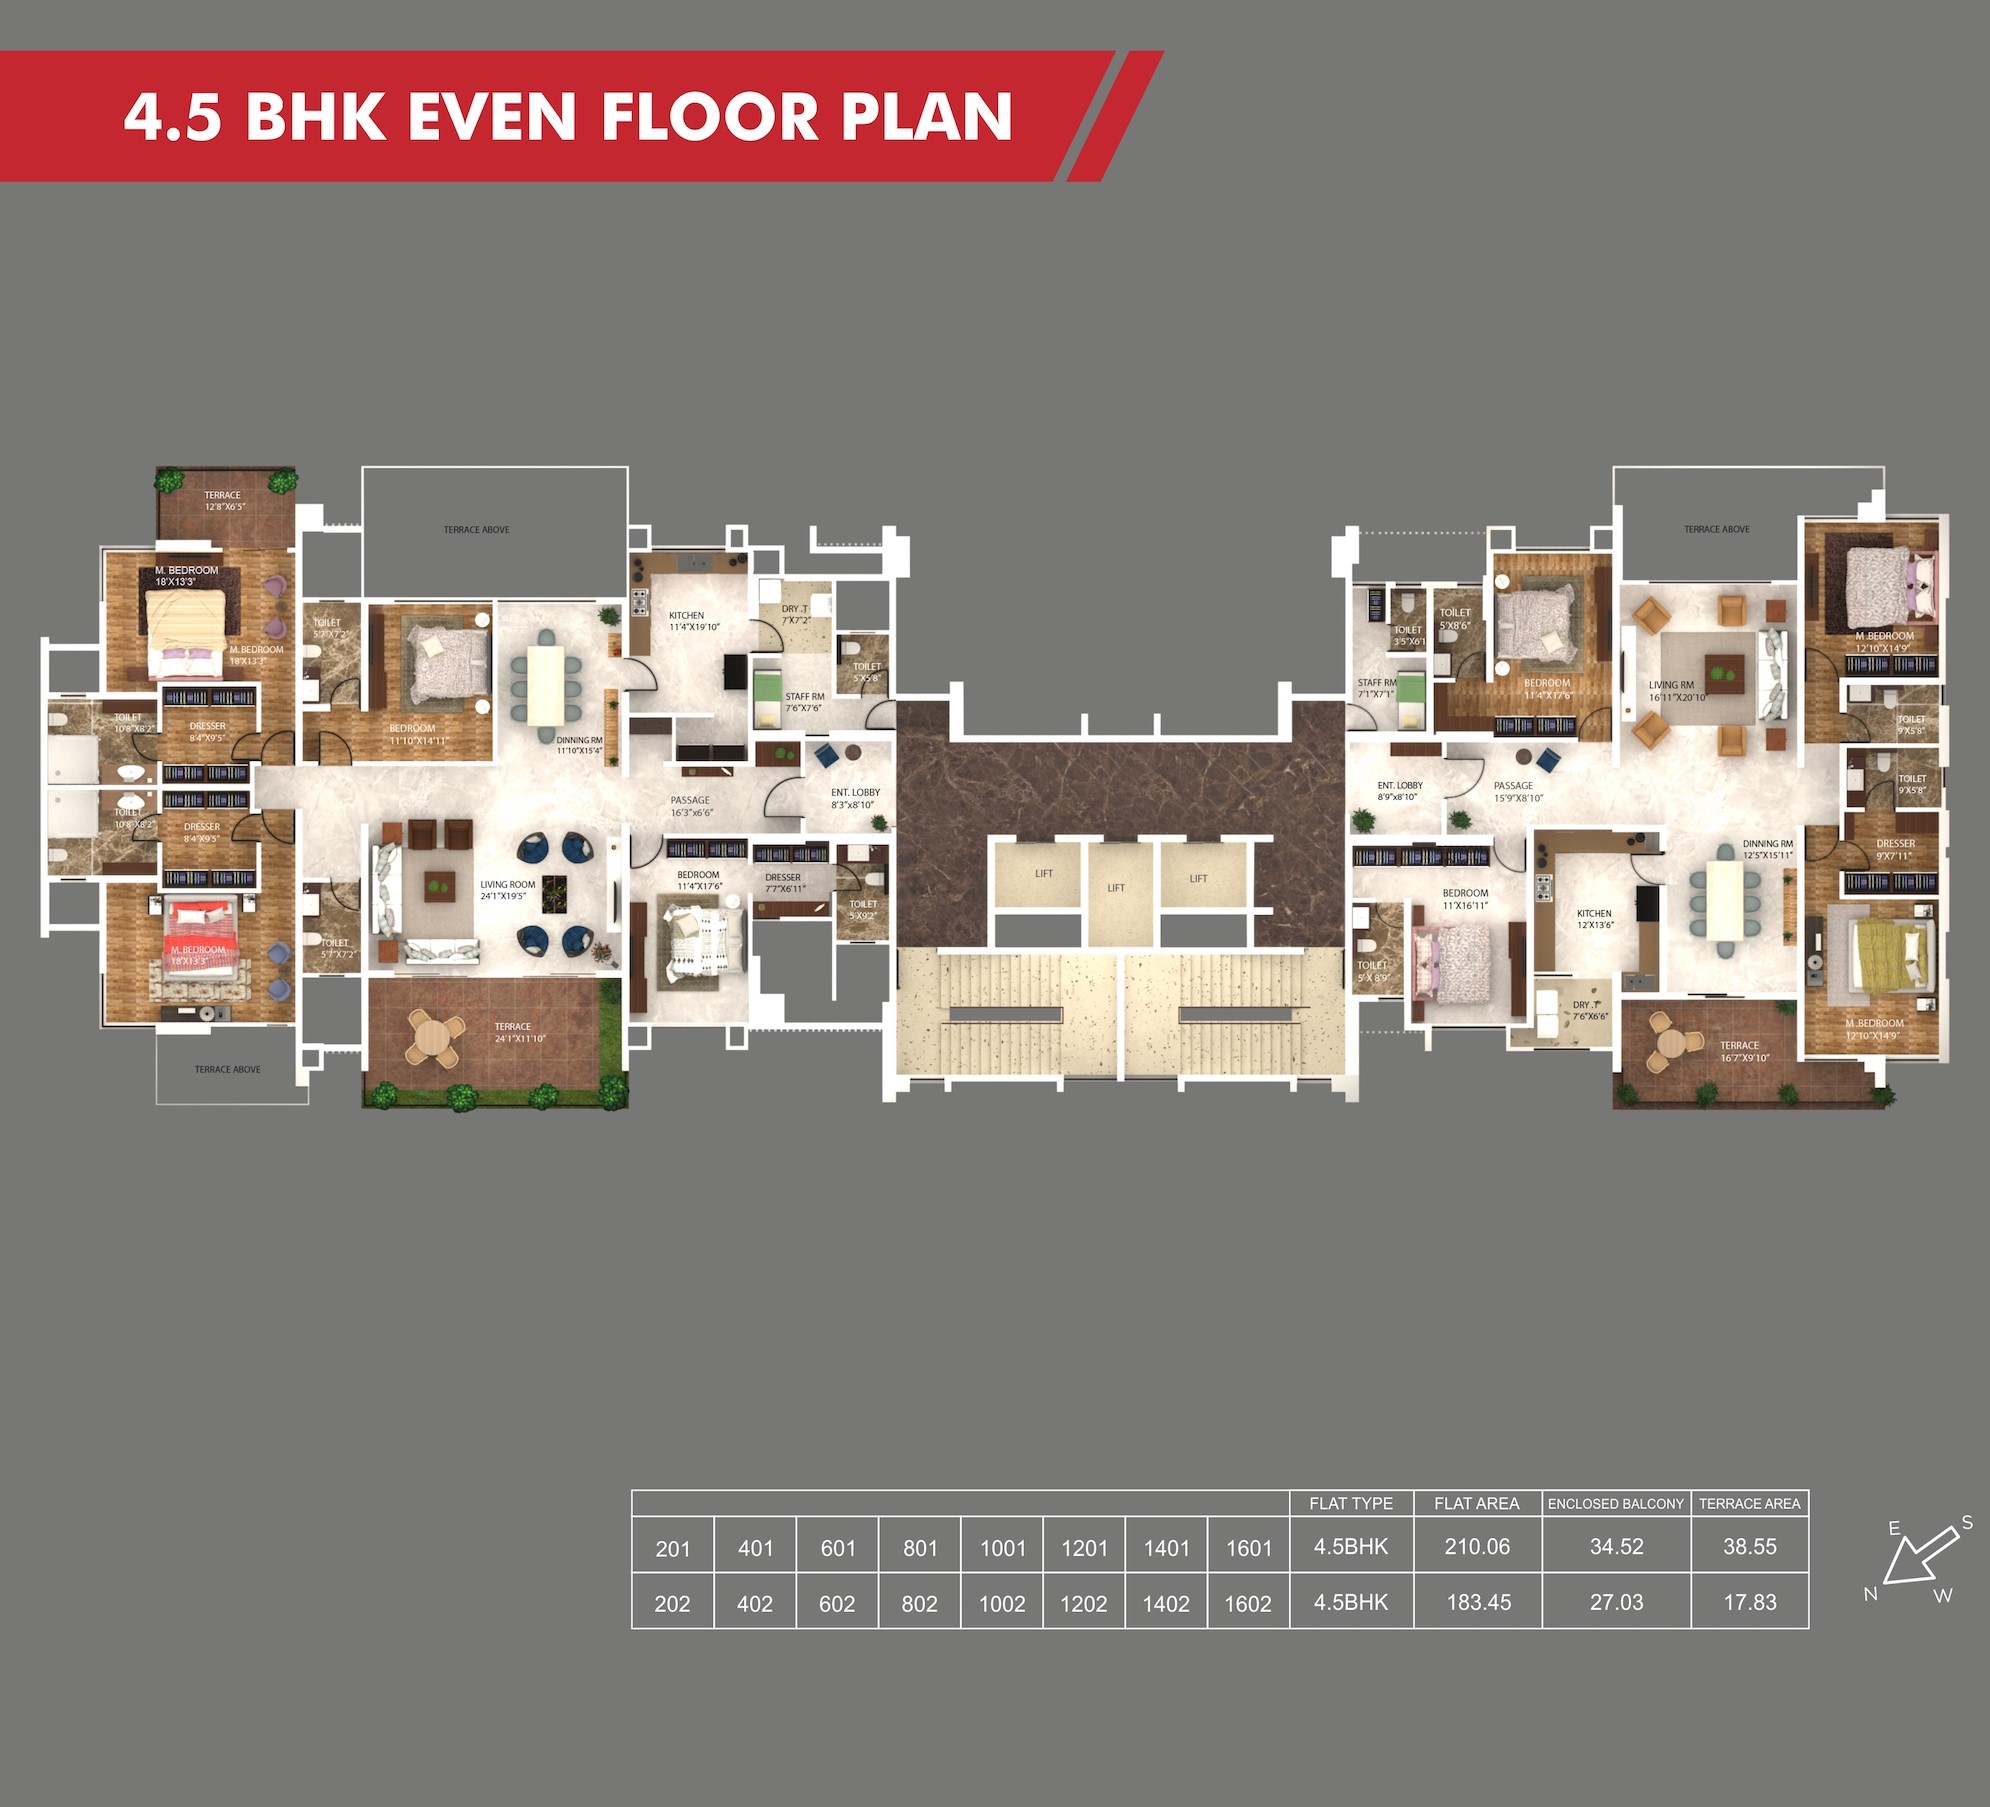 Sanctum 4.5 BHK Even Floor Plan